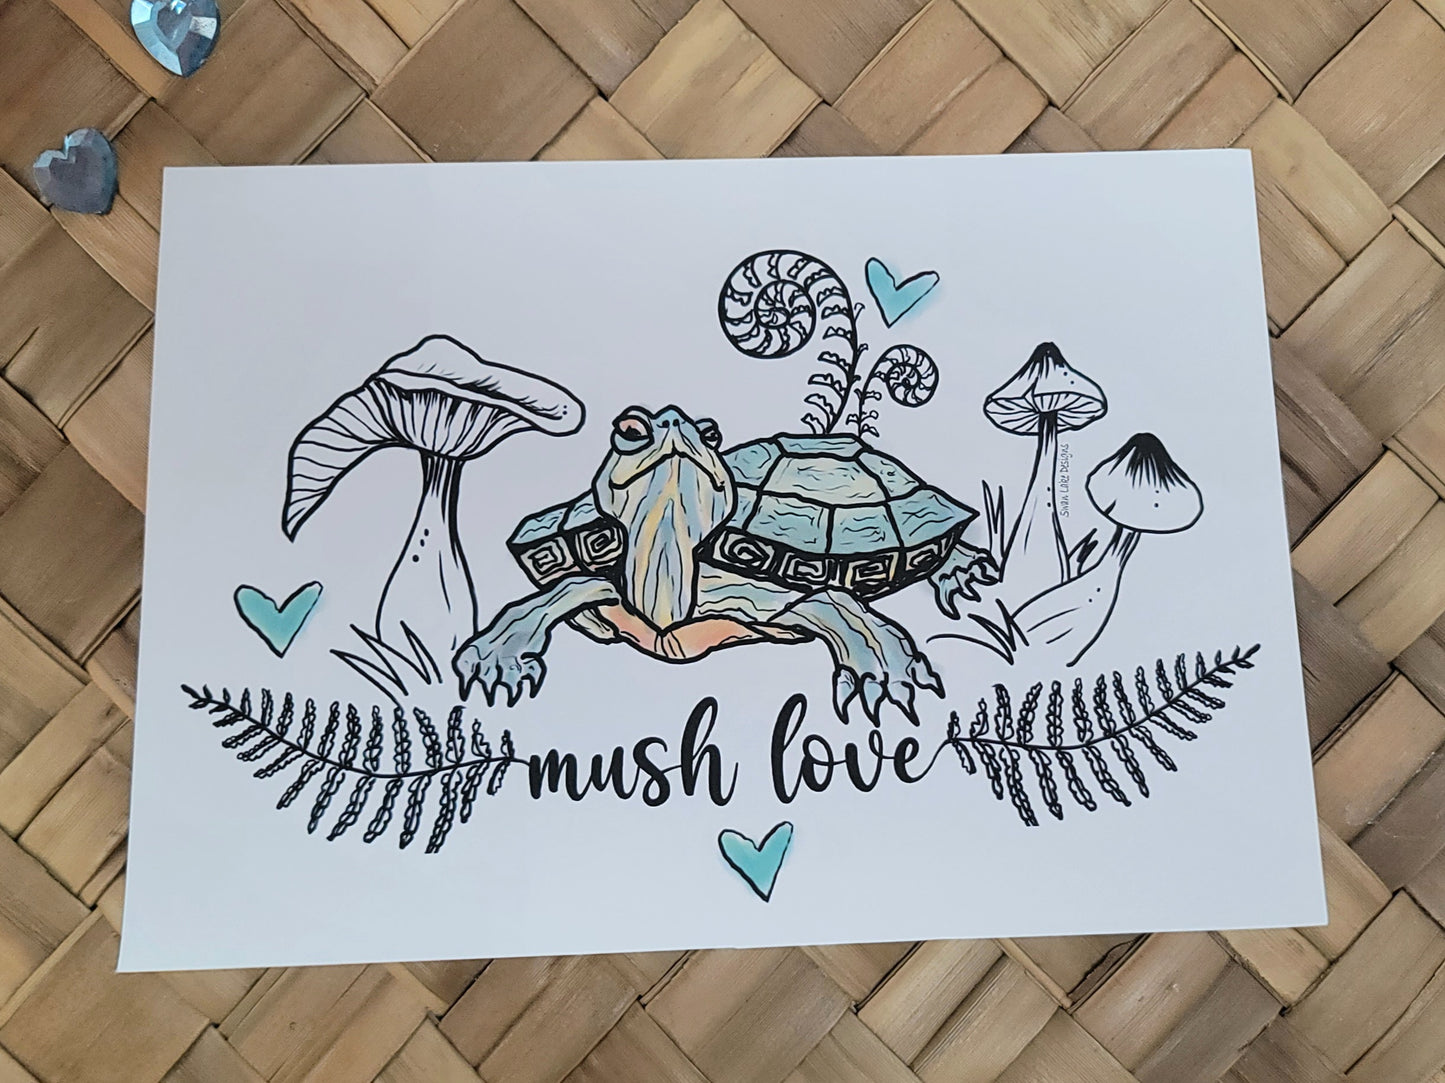 card - turtle "mush love"  *free shipping